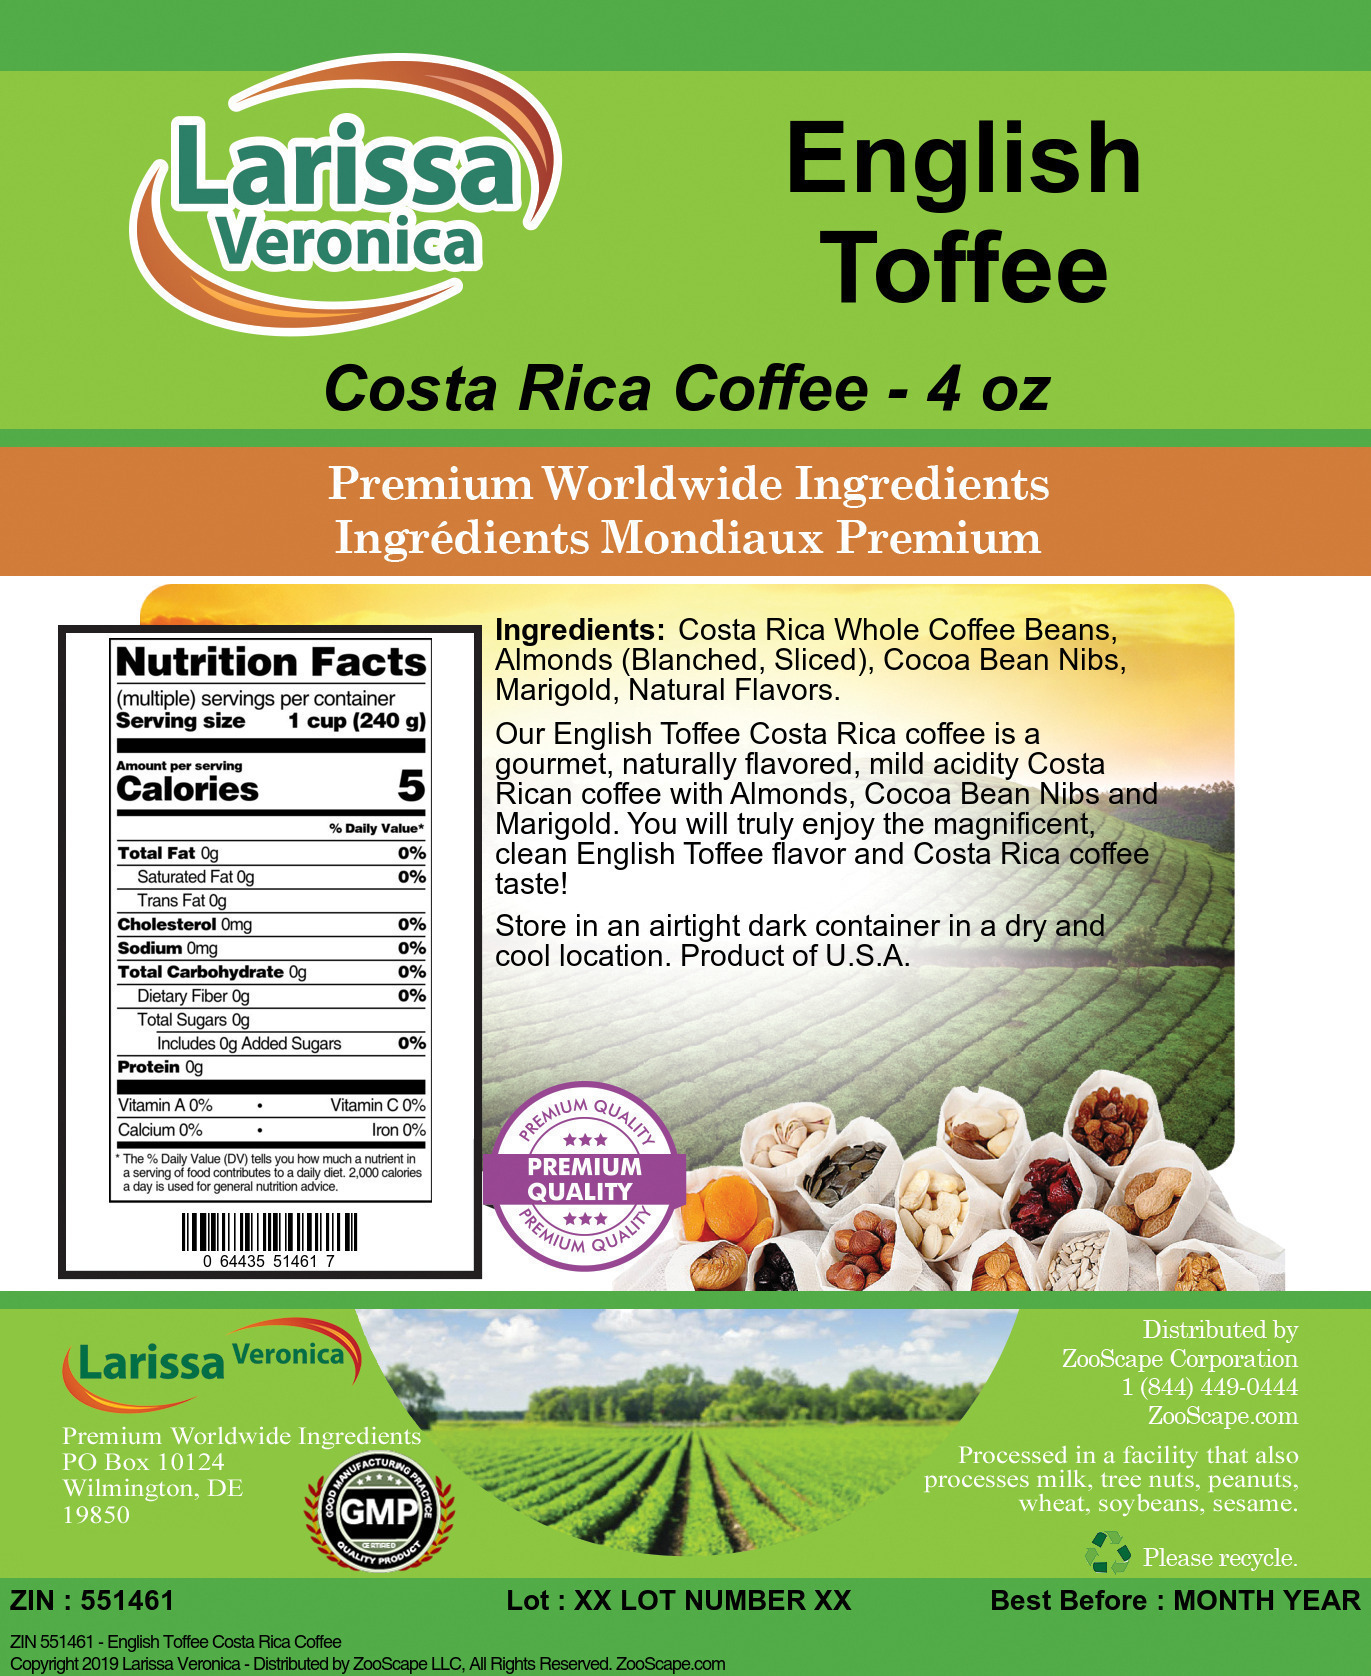 English Toffee Costa Rica Coffee - Label